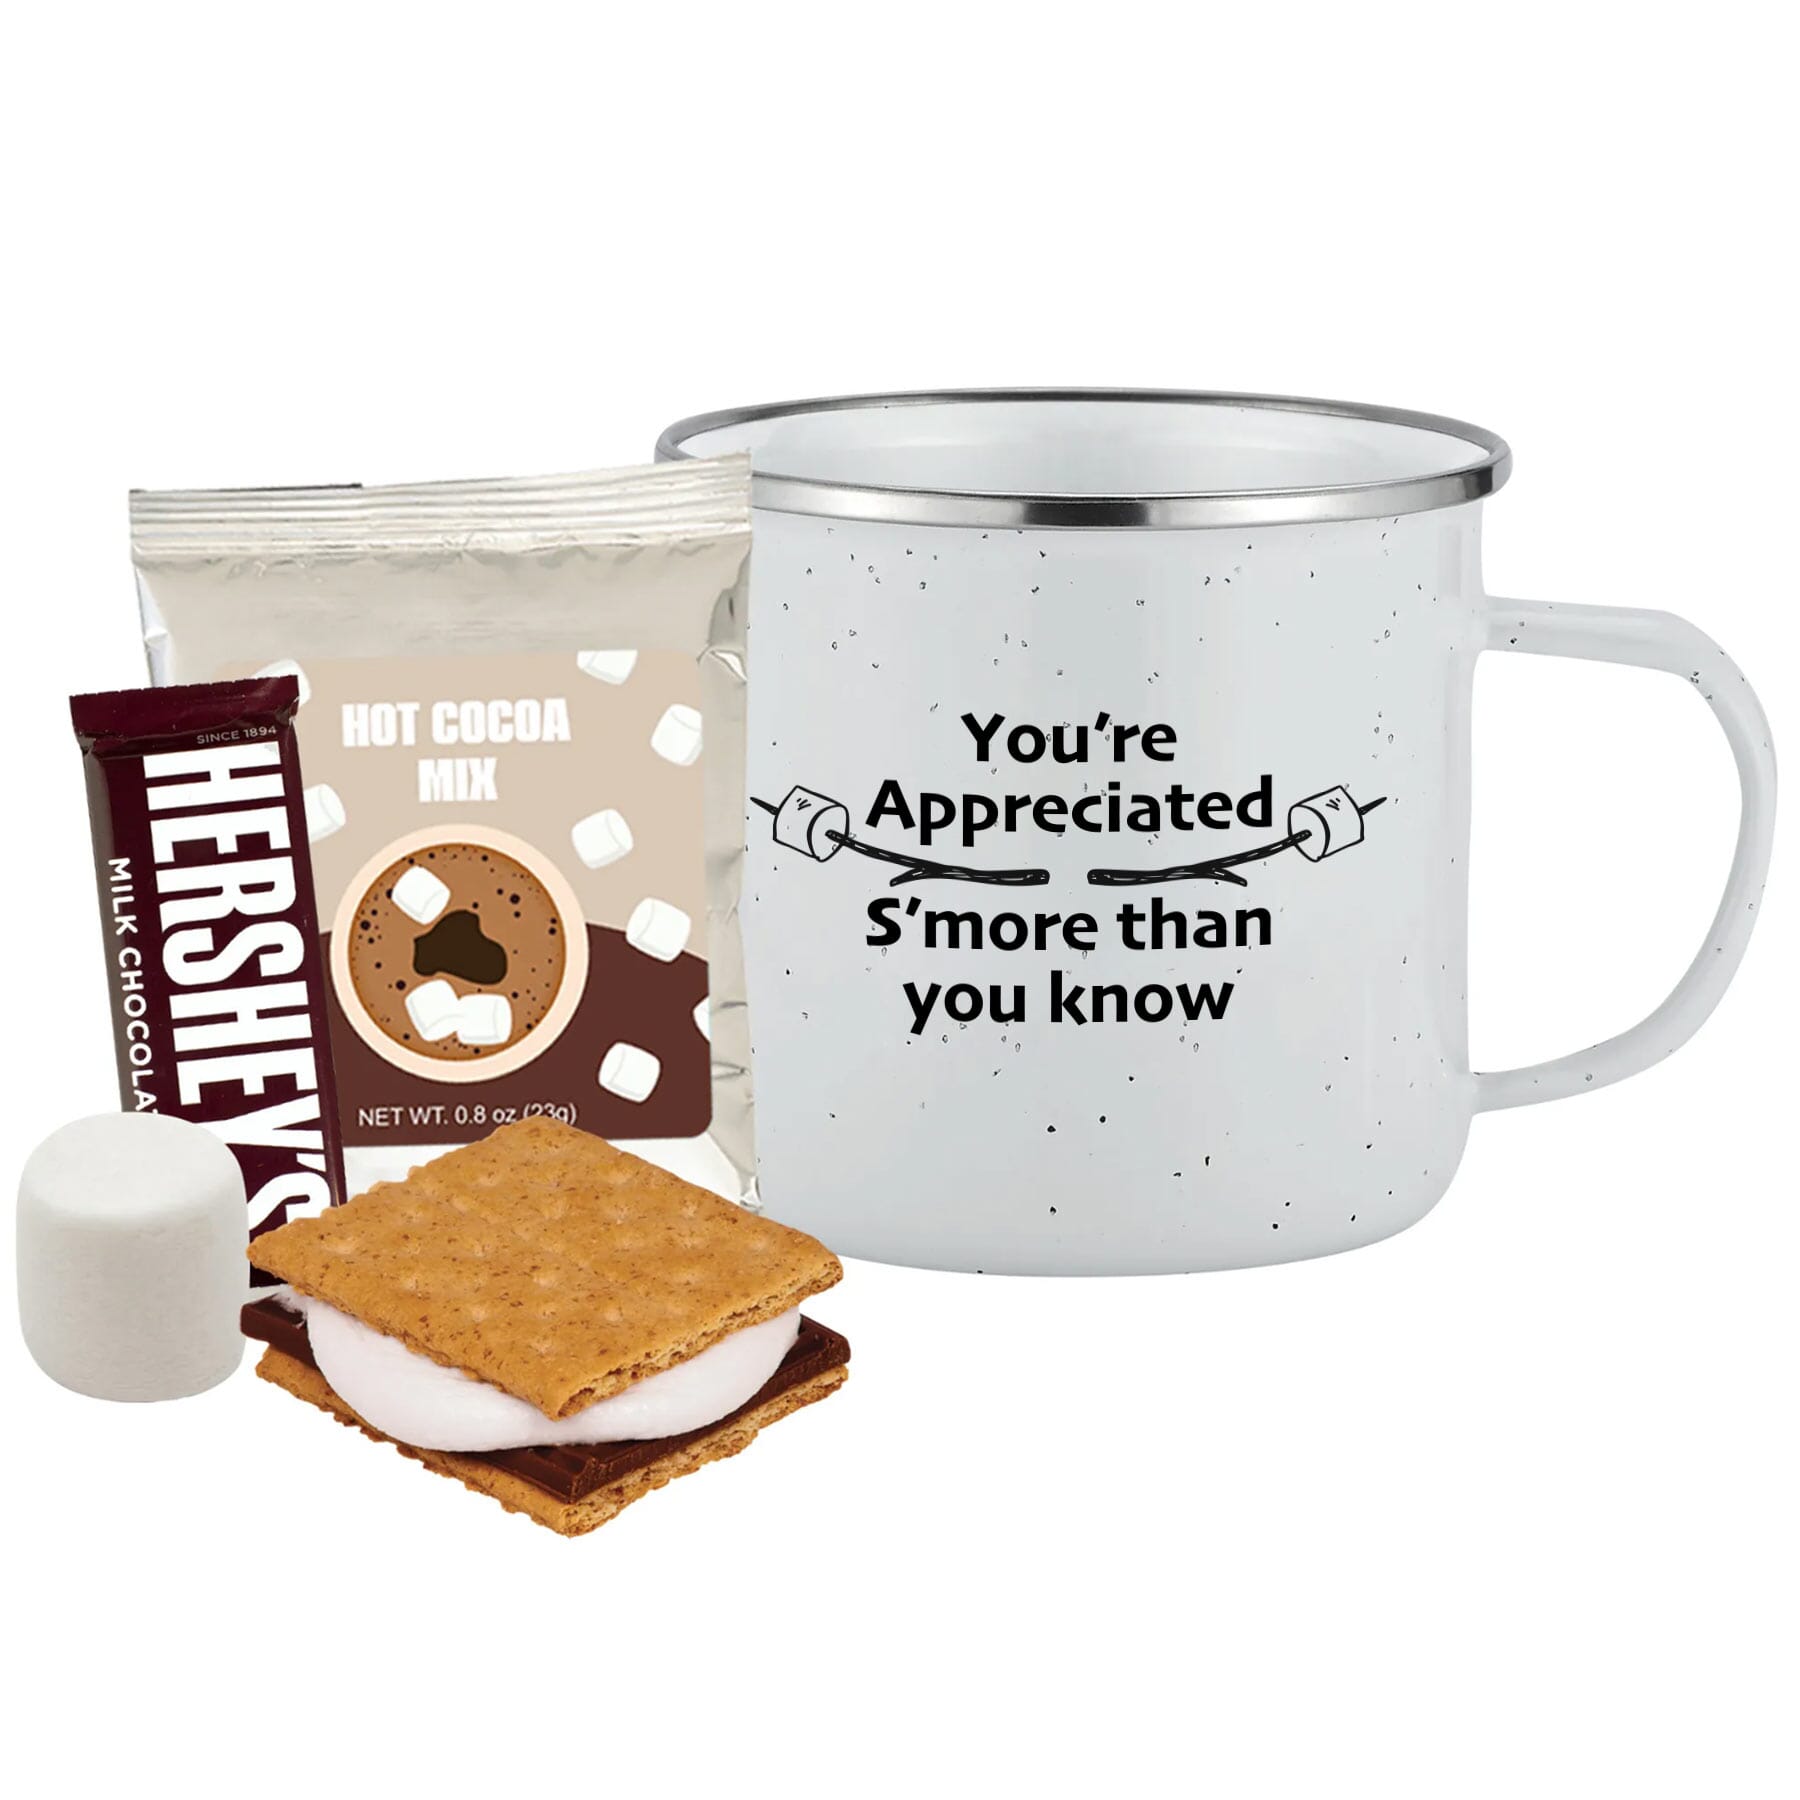 16 oz Speckled Camping Mug - Cocoa & S'Mores Gift Set